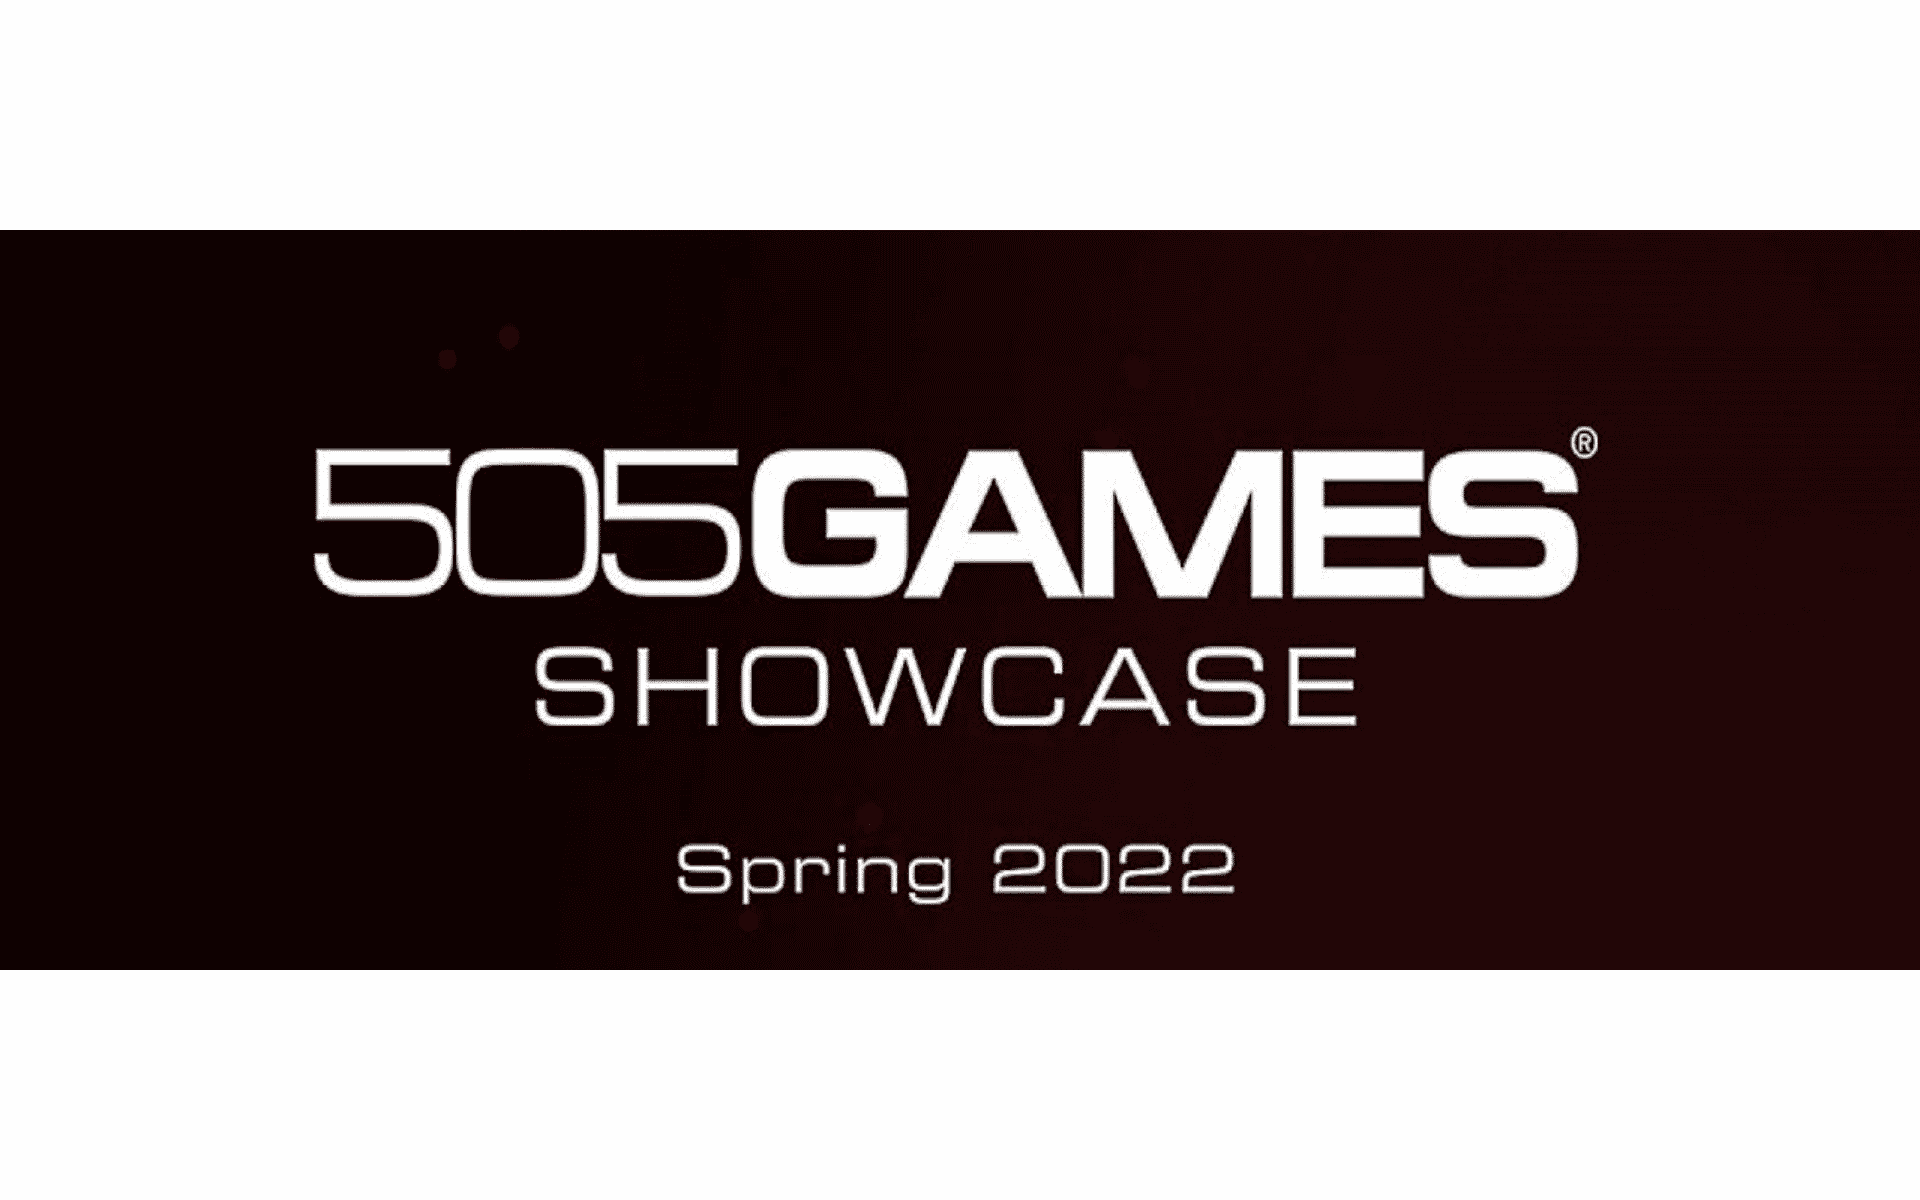 505 games showcase